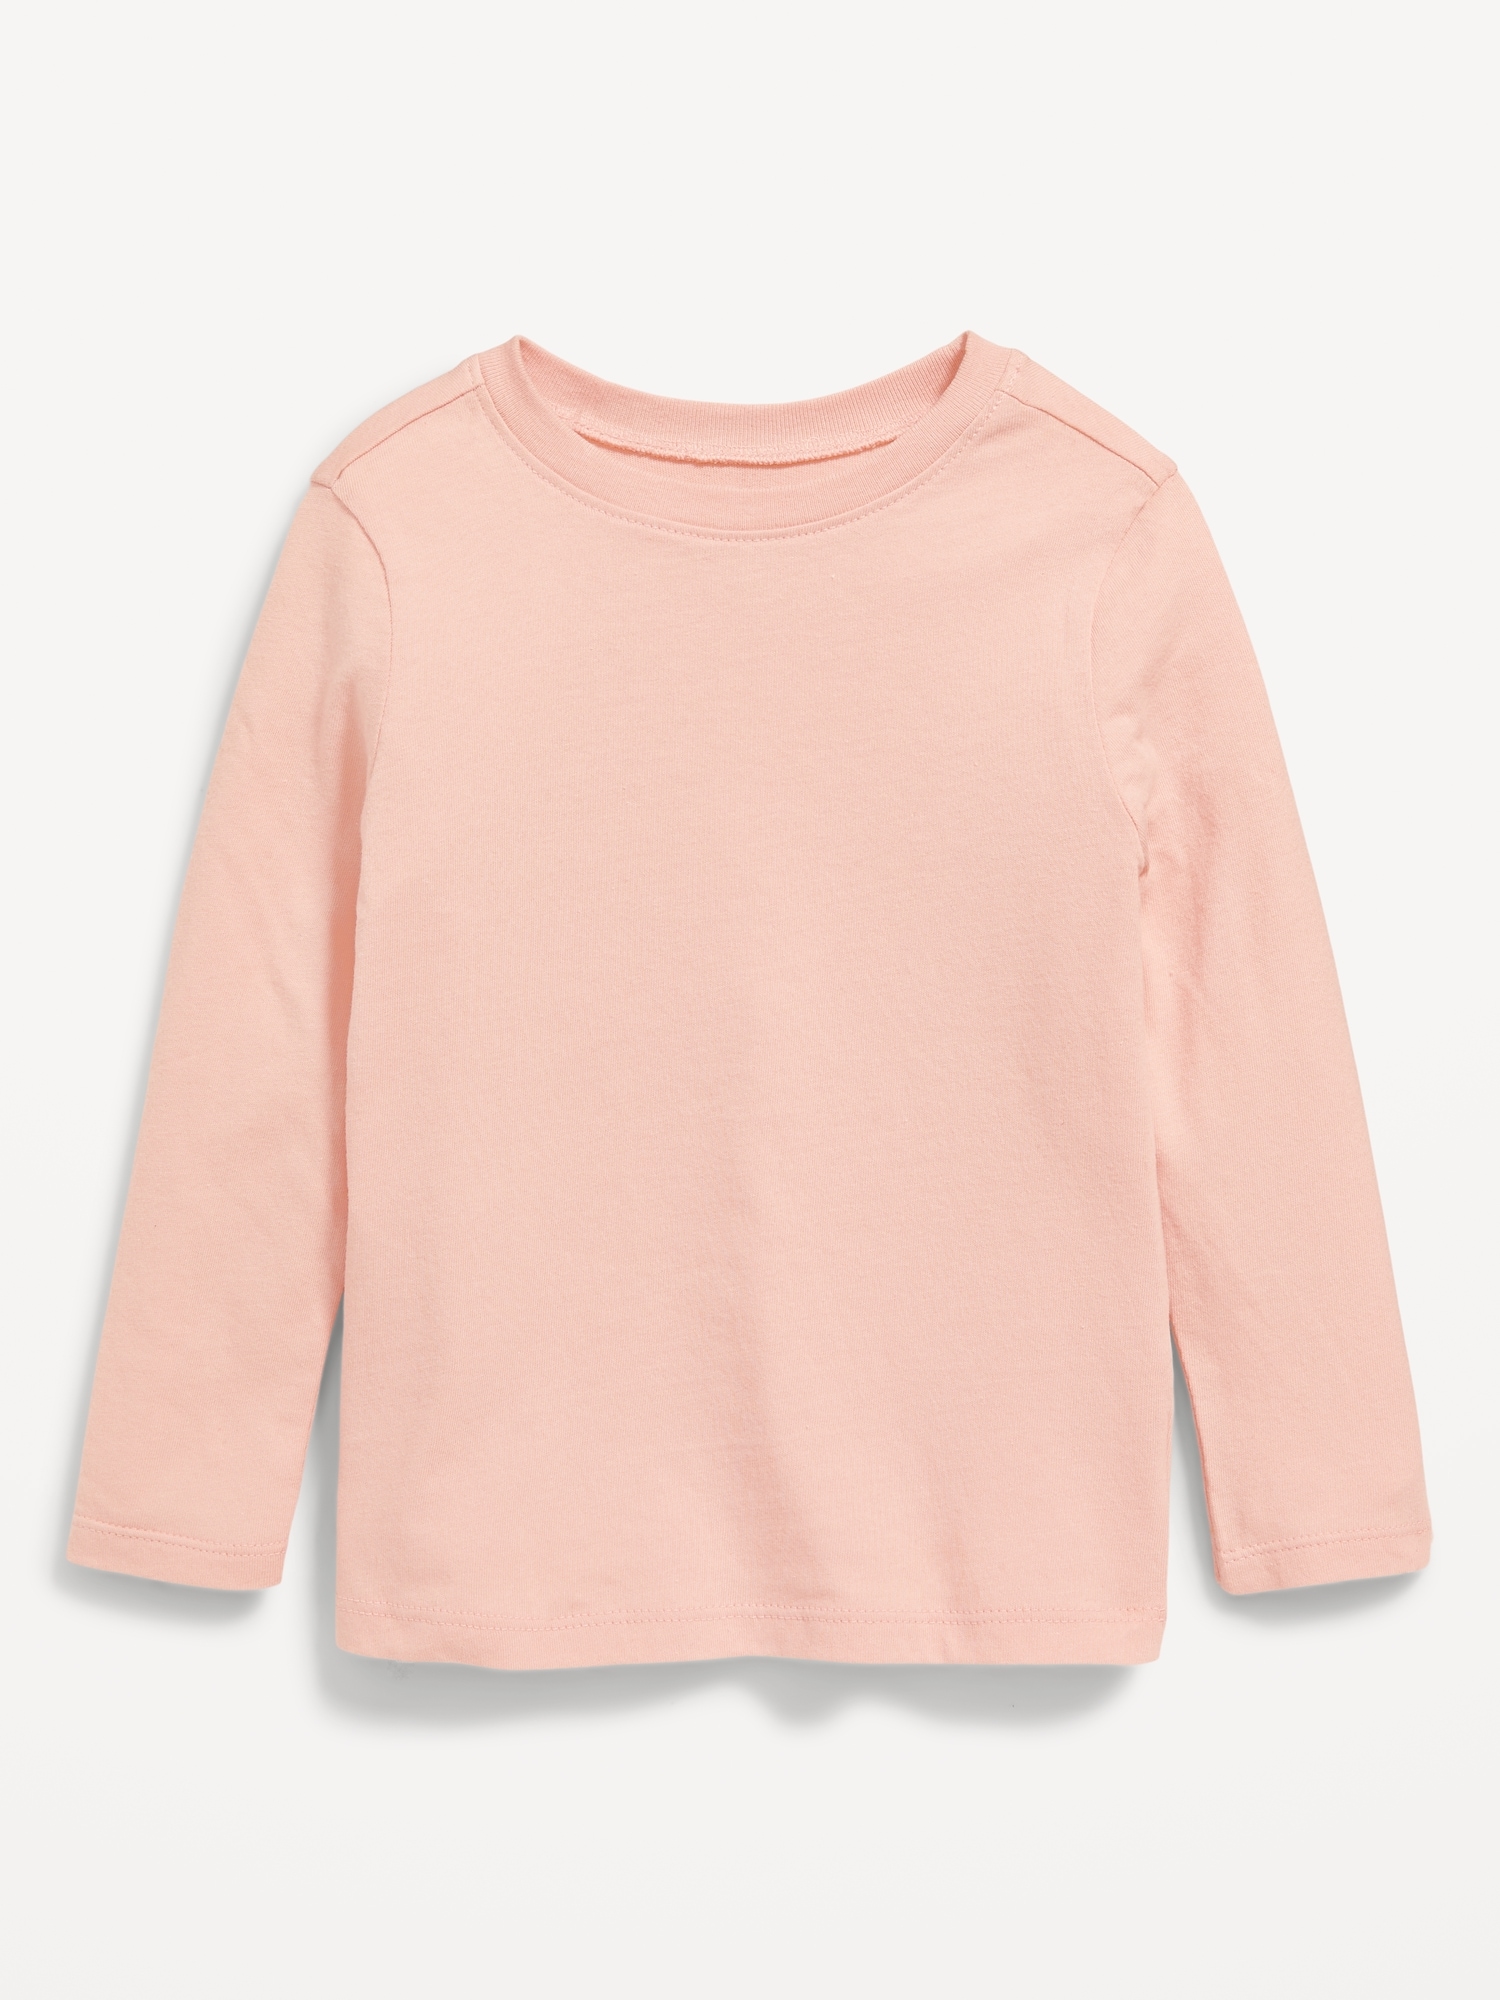 Unisex | for Long-Sleeve Navy Old Toddler T-Shirt